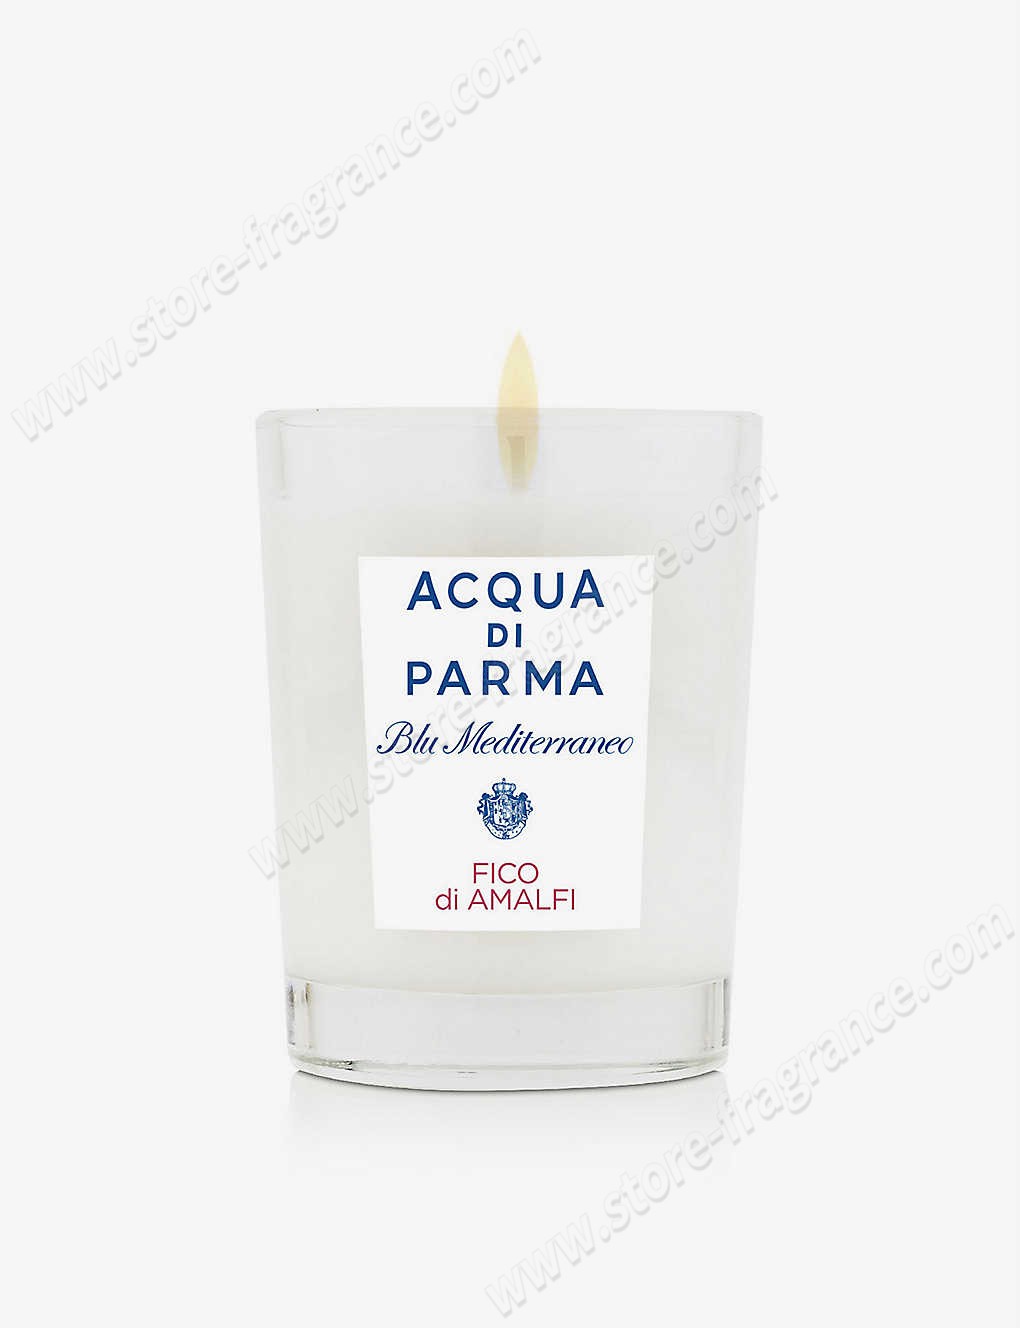 ACQUA DI PARMA/Blu Mediterraneo Fico di Amalfi scented candle 200g ✿ Discount Store - ACQUA DI PARMA/Blu Mediterraneo Fico di Amalfi scented candle 200g ✿ Discount Store